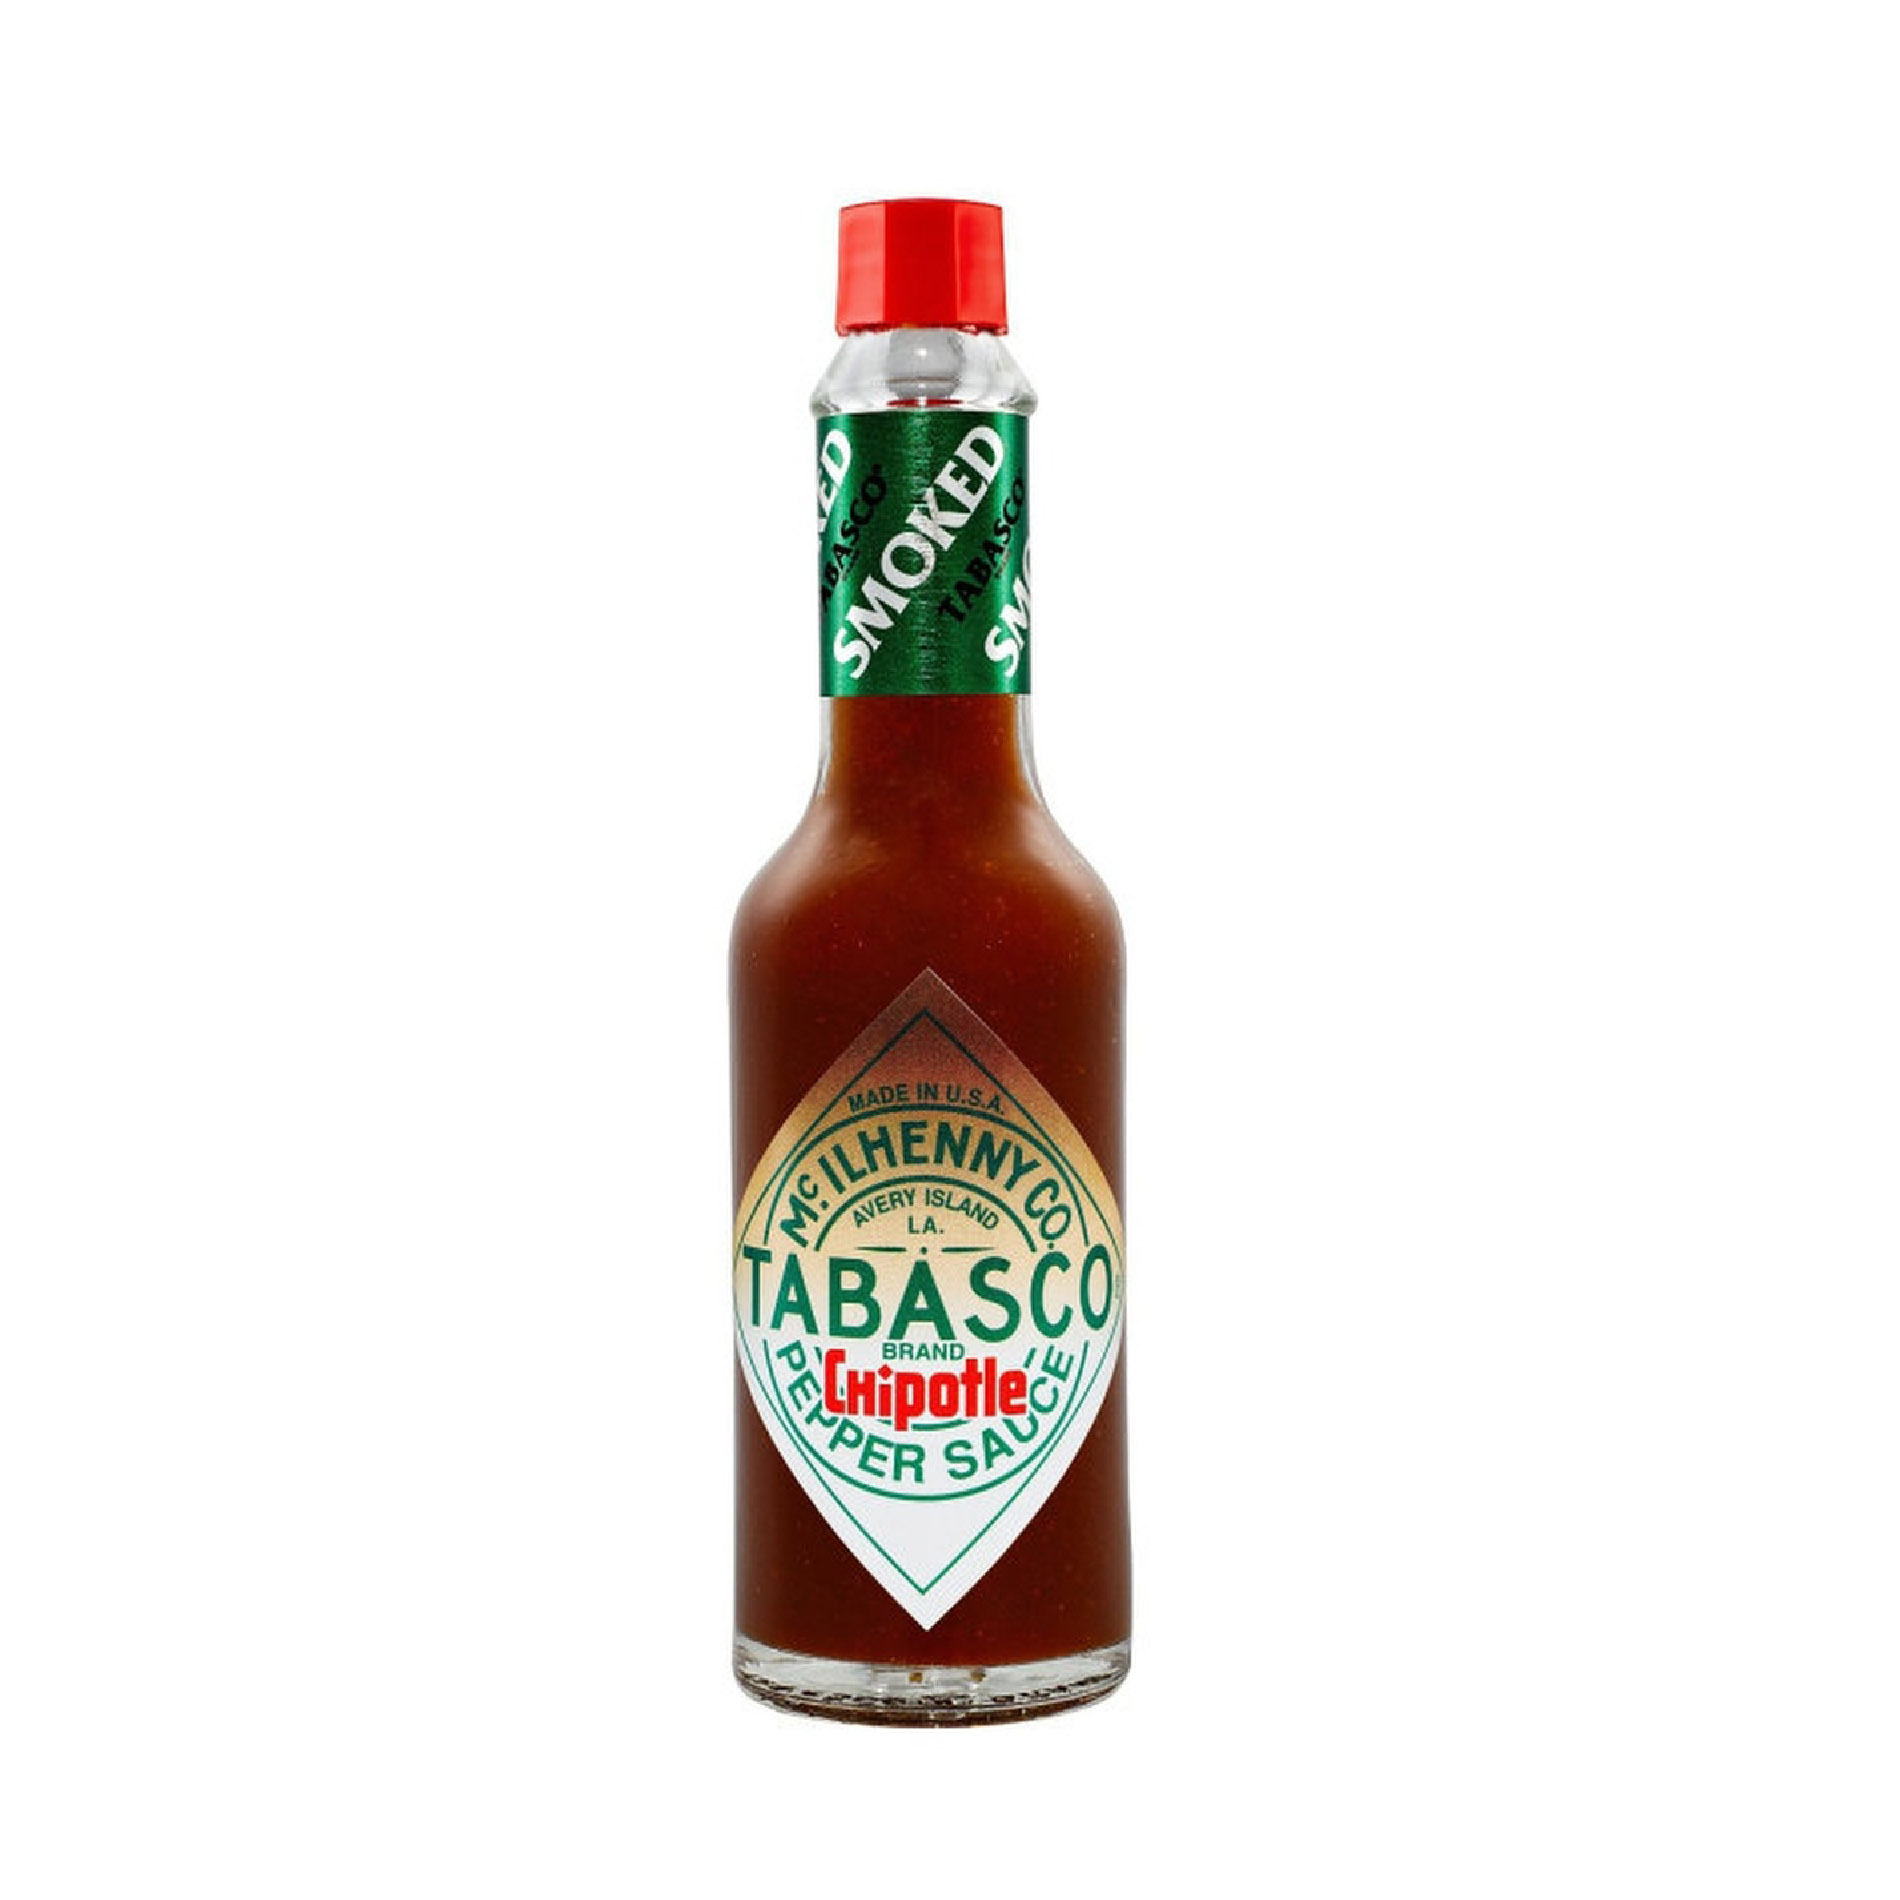 Pepper sauce. Соус ""Табаско"" перечный Чипотле. Табаско 60 мл. Табаско 150 мл. Острый соус Табаско.